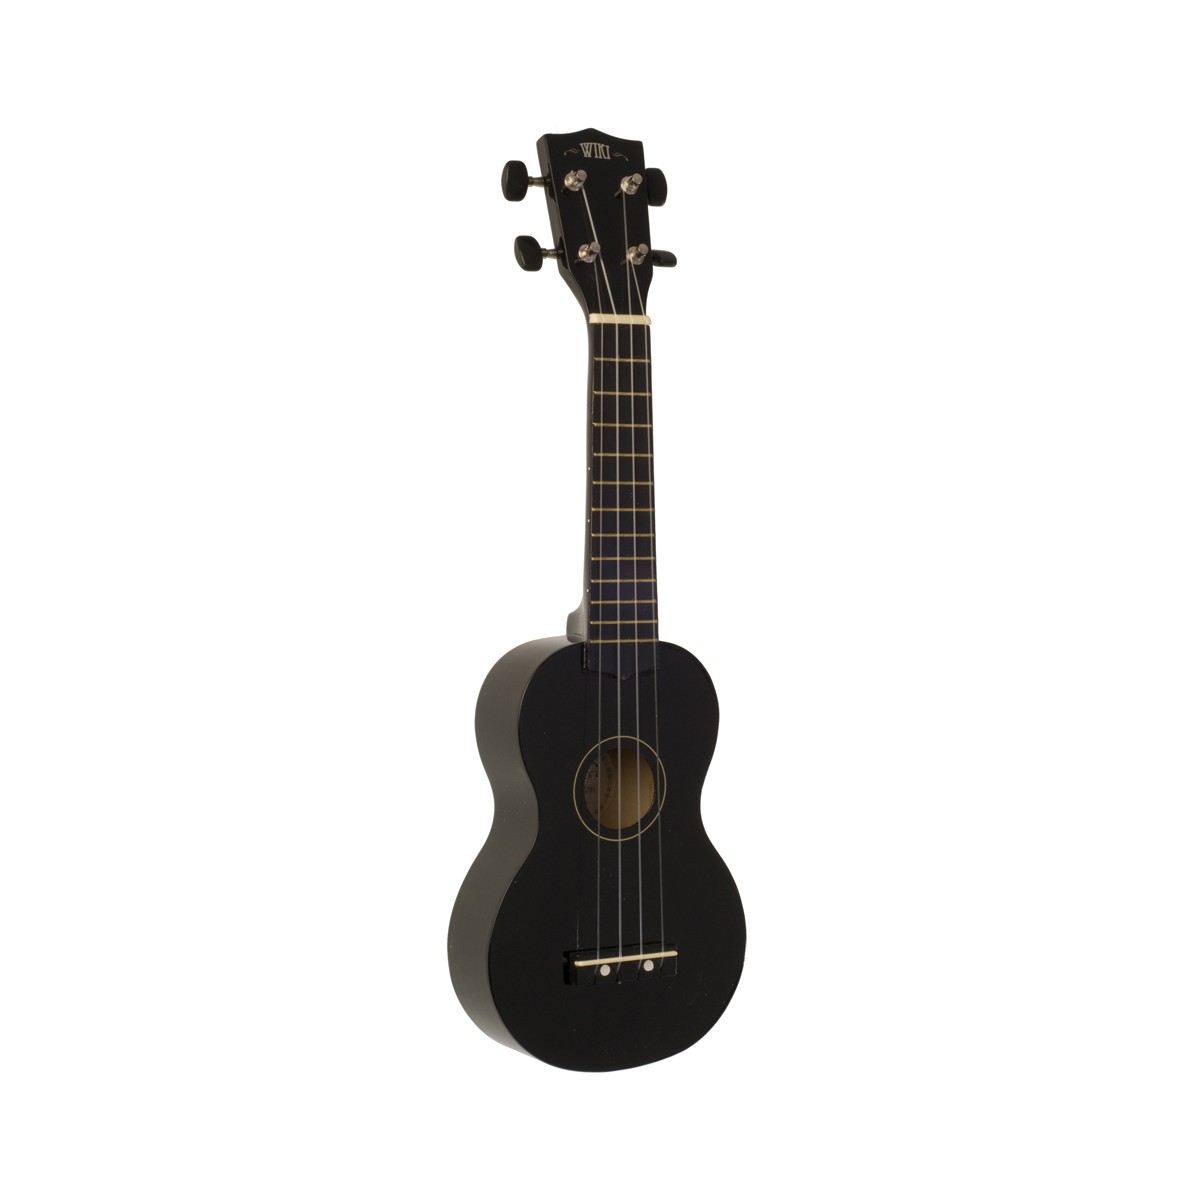 WIKI UK10G BK -  гитара укулеле сопрано, клен, цвет черный глянец, чехол в комплекте